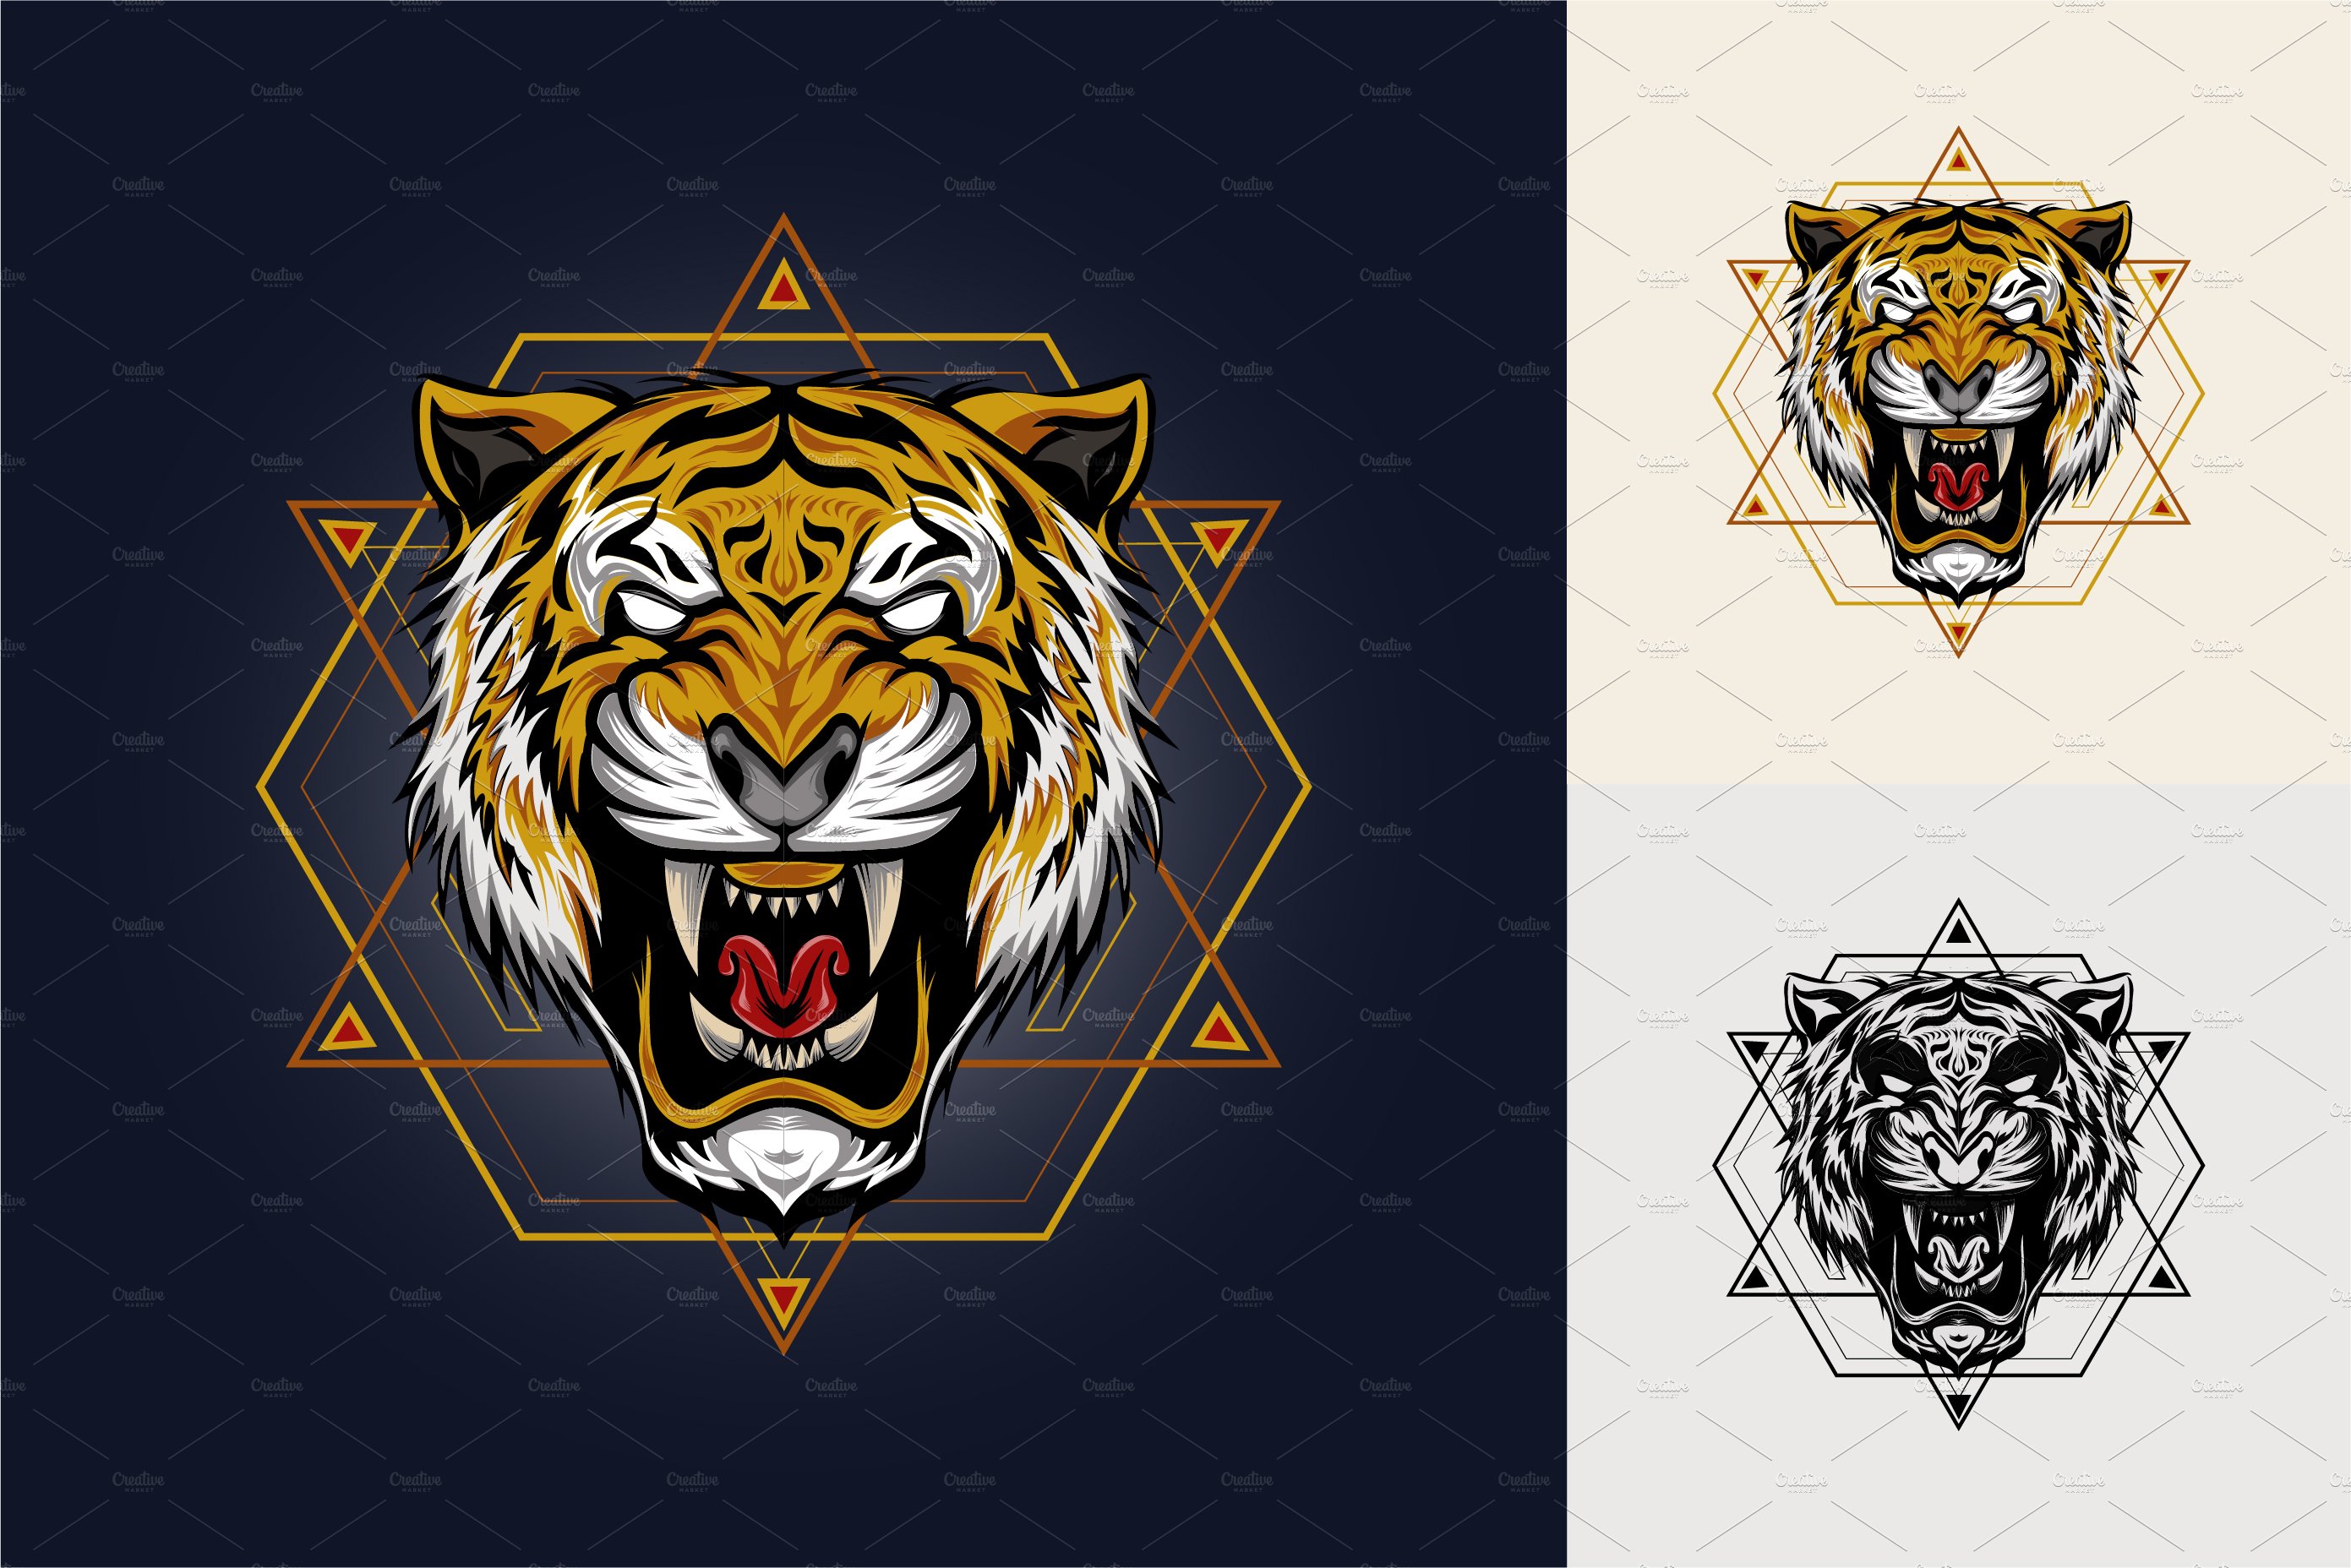 Ferocious tiger cover image.